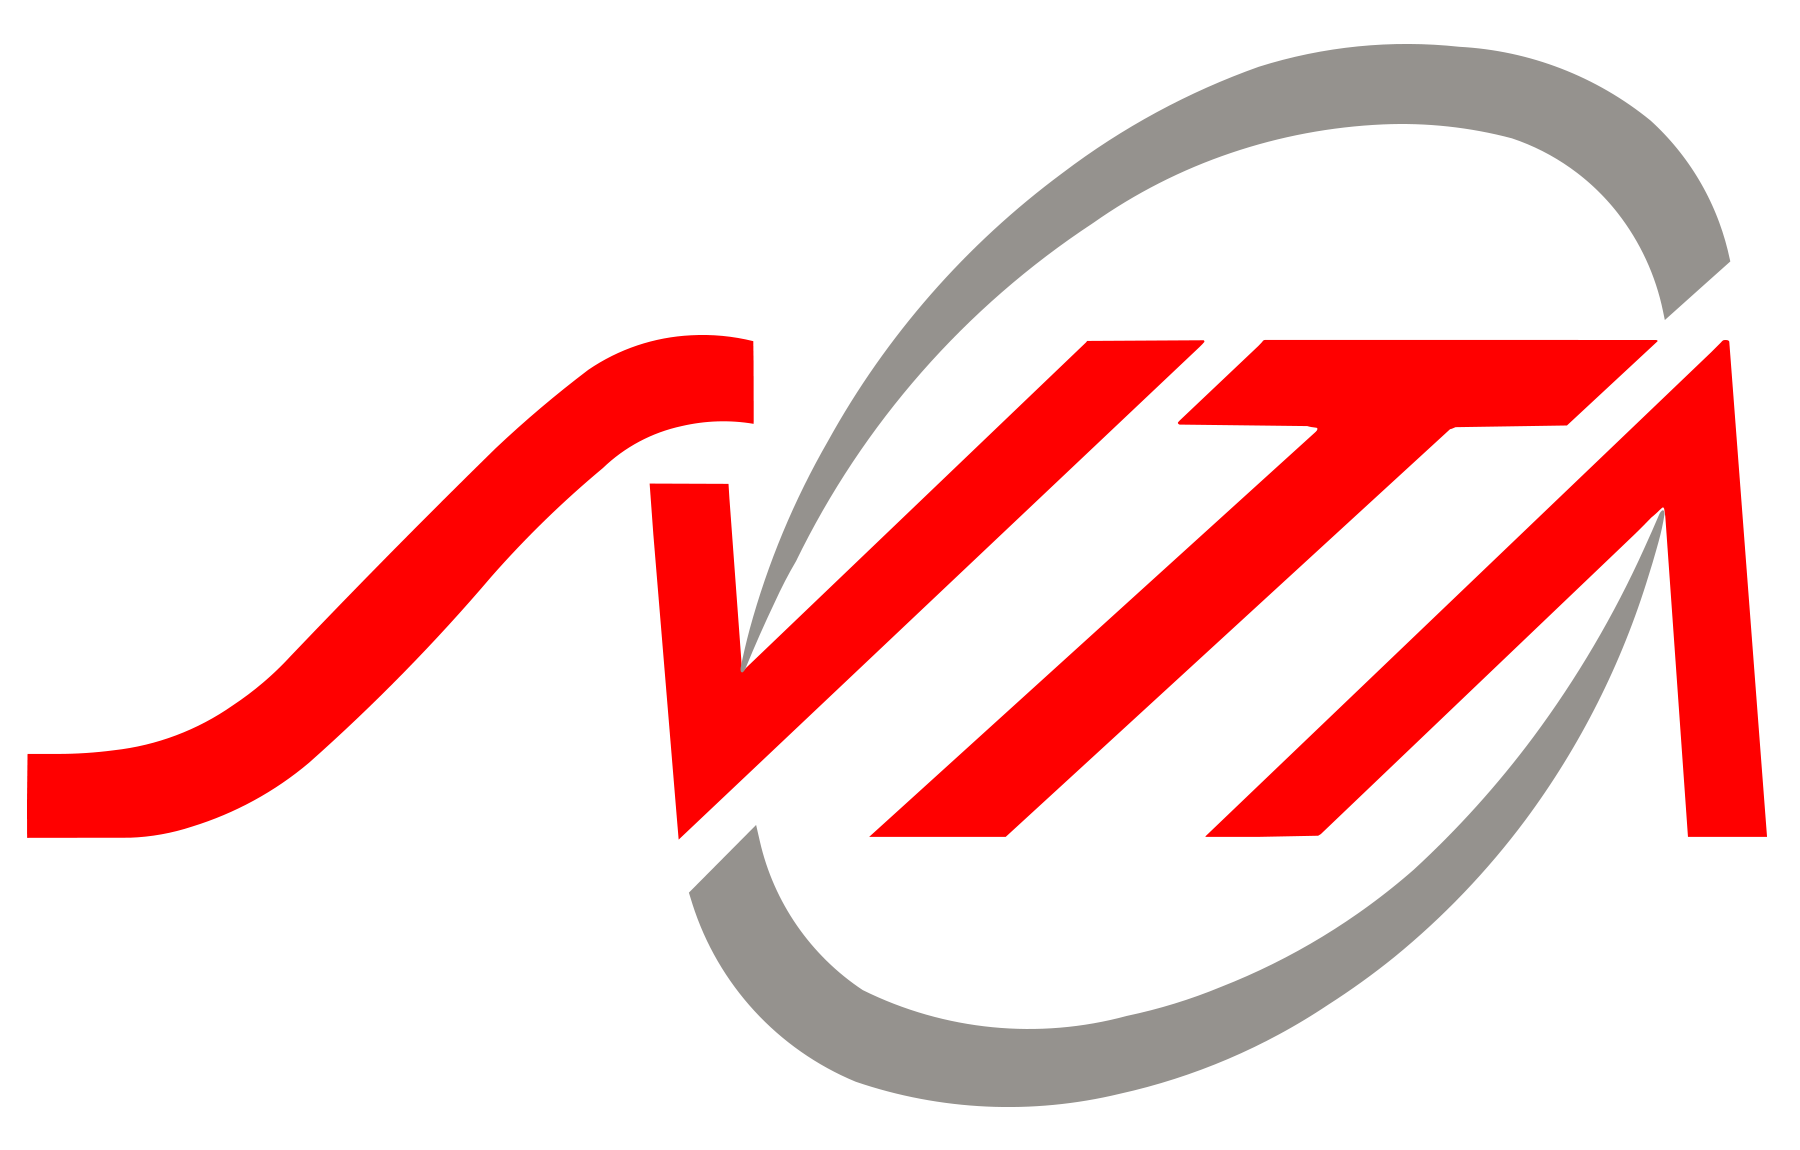 Singapore Vehicle Traders Association company logo